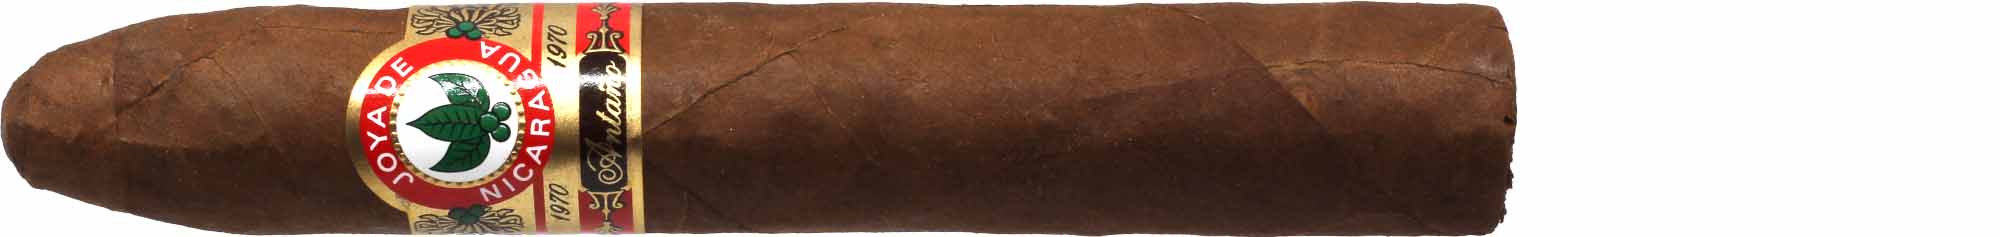 Joya de Nicaragua Zigarren Antaño 1970 Magnum 660